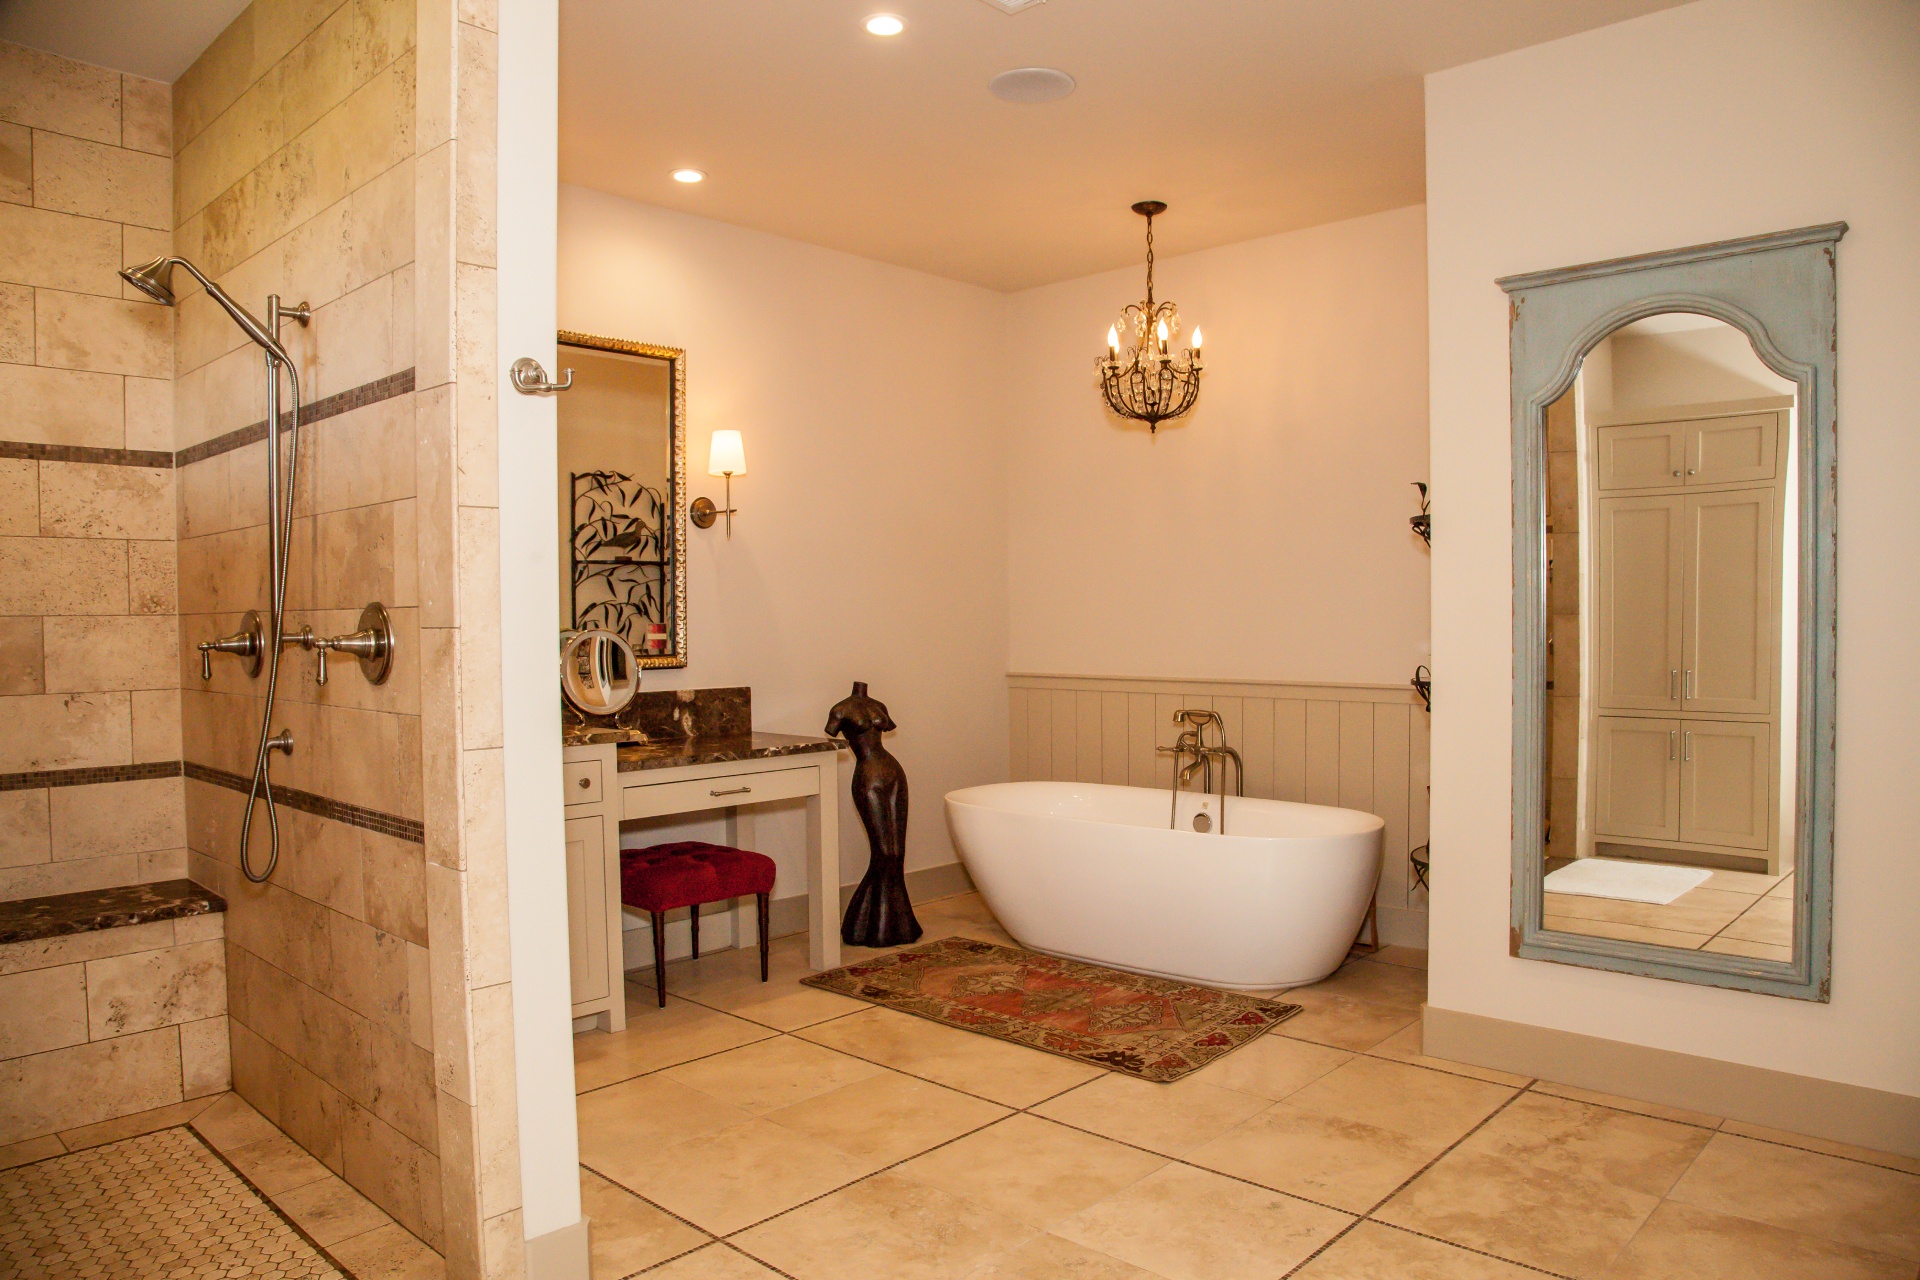 classic-themed bathroom area with shower and bath tub